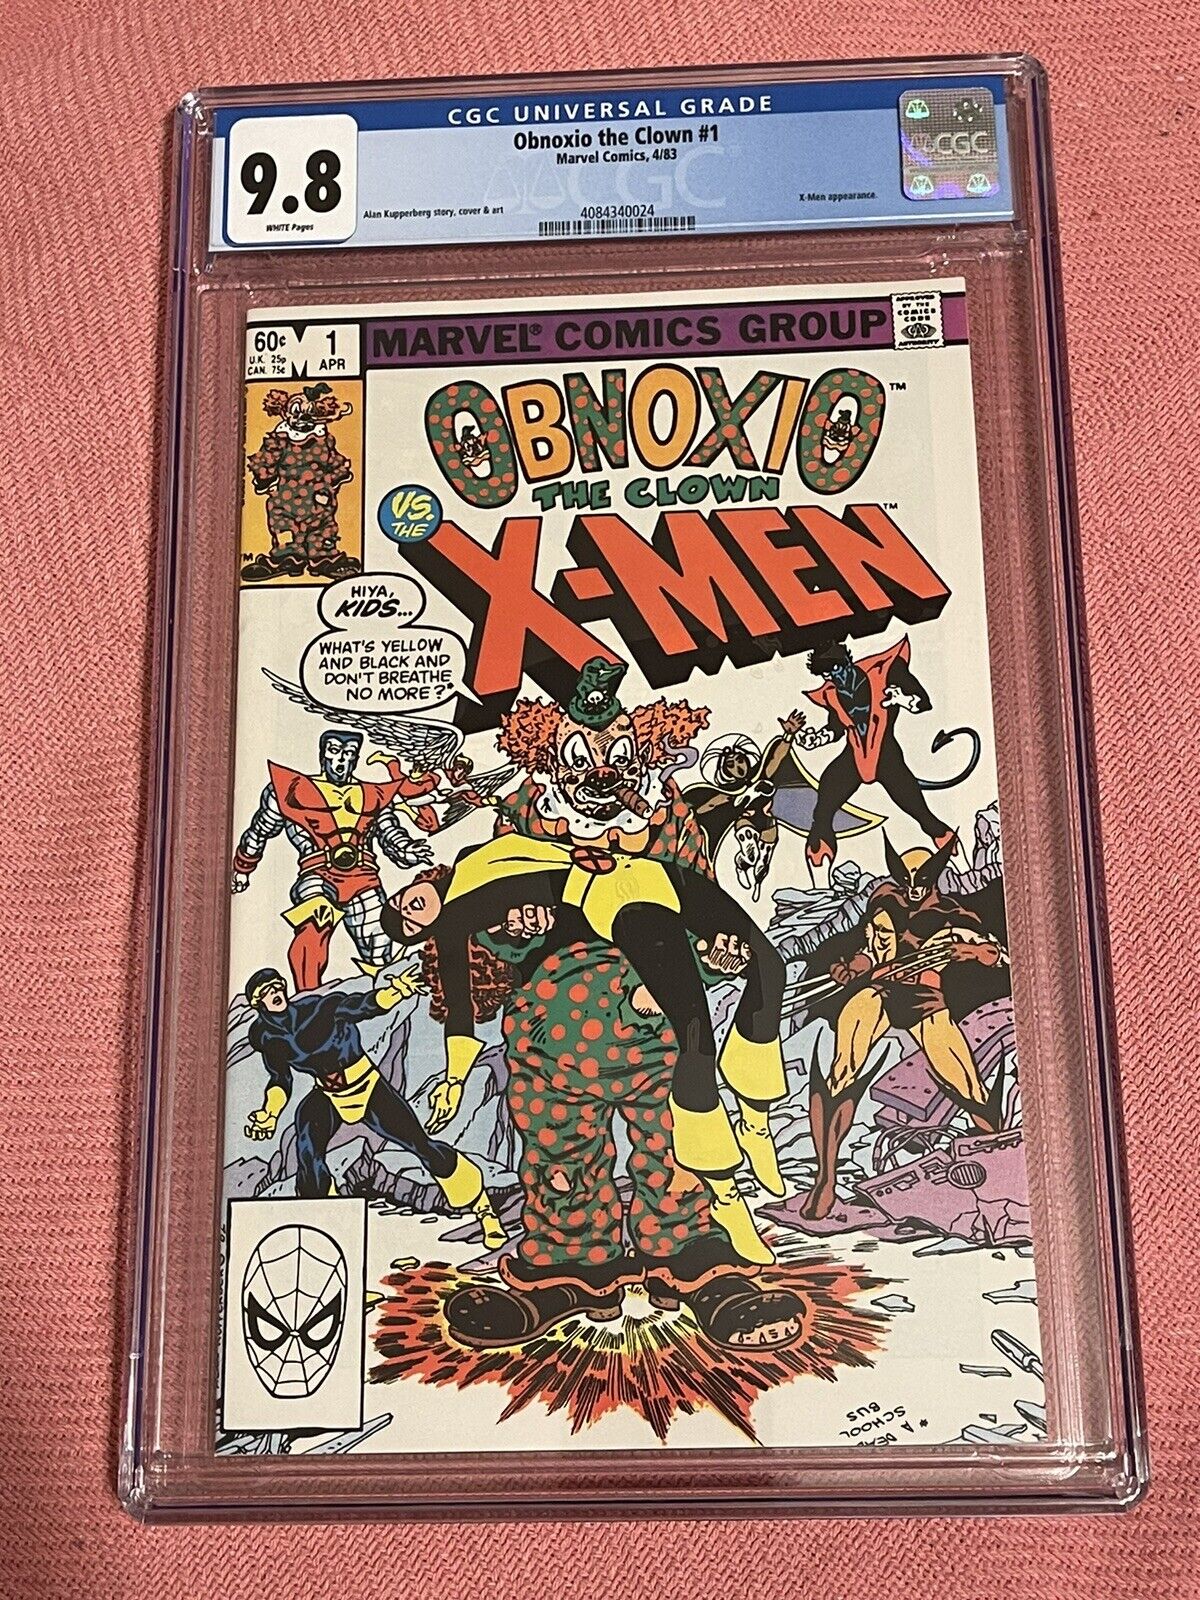 Obnoxio the Clown vs. the X-Men #1 CGC 9.8, White Pages, Bonus Raw Copy, Marvel